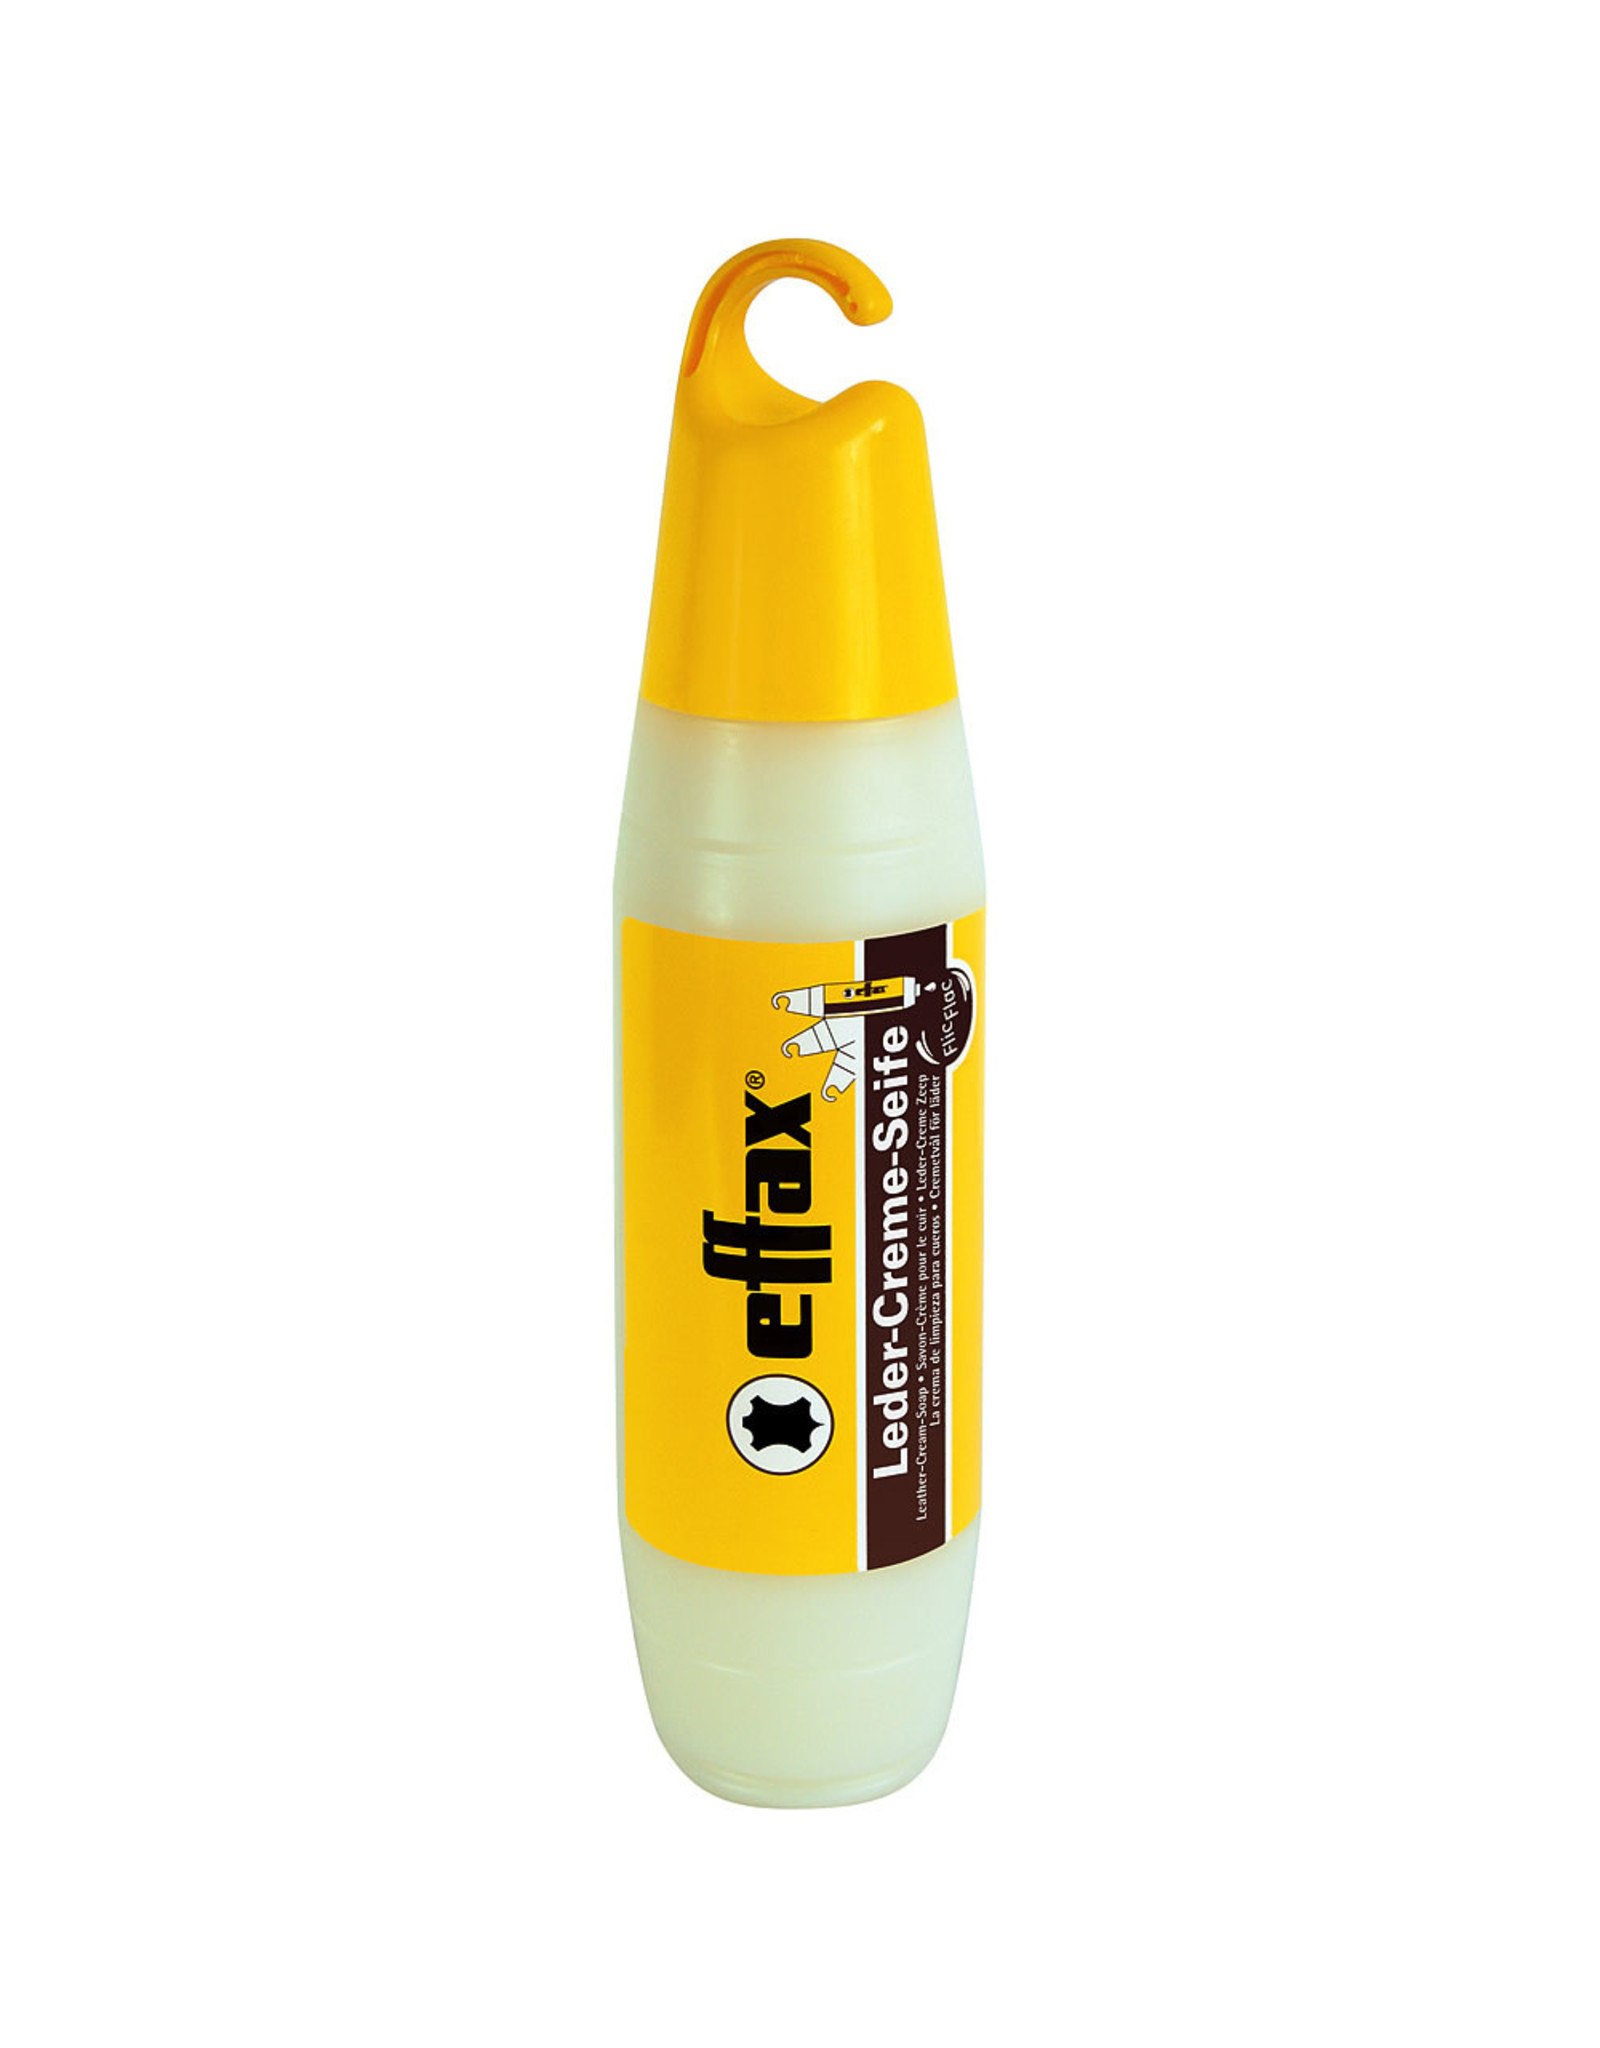 Effax Leather Cream Soap in Flic-Flac Bottle 400ml